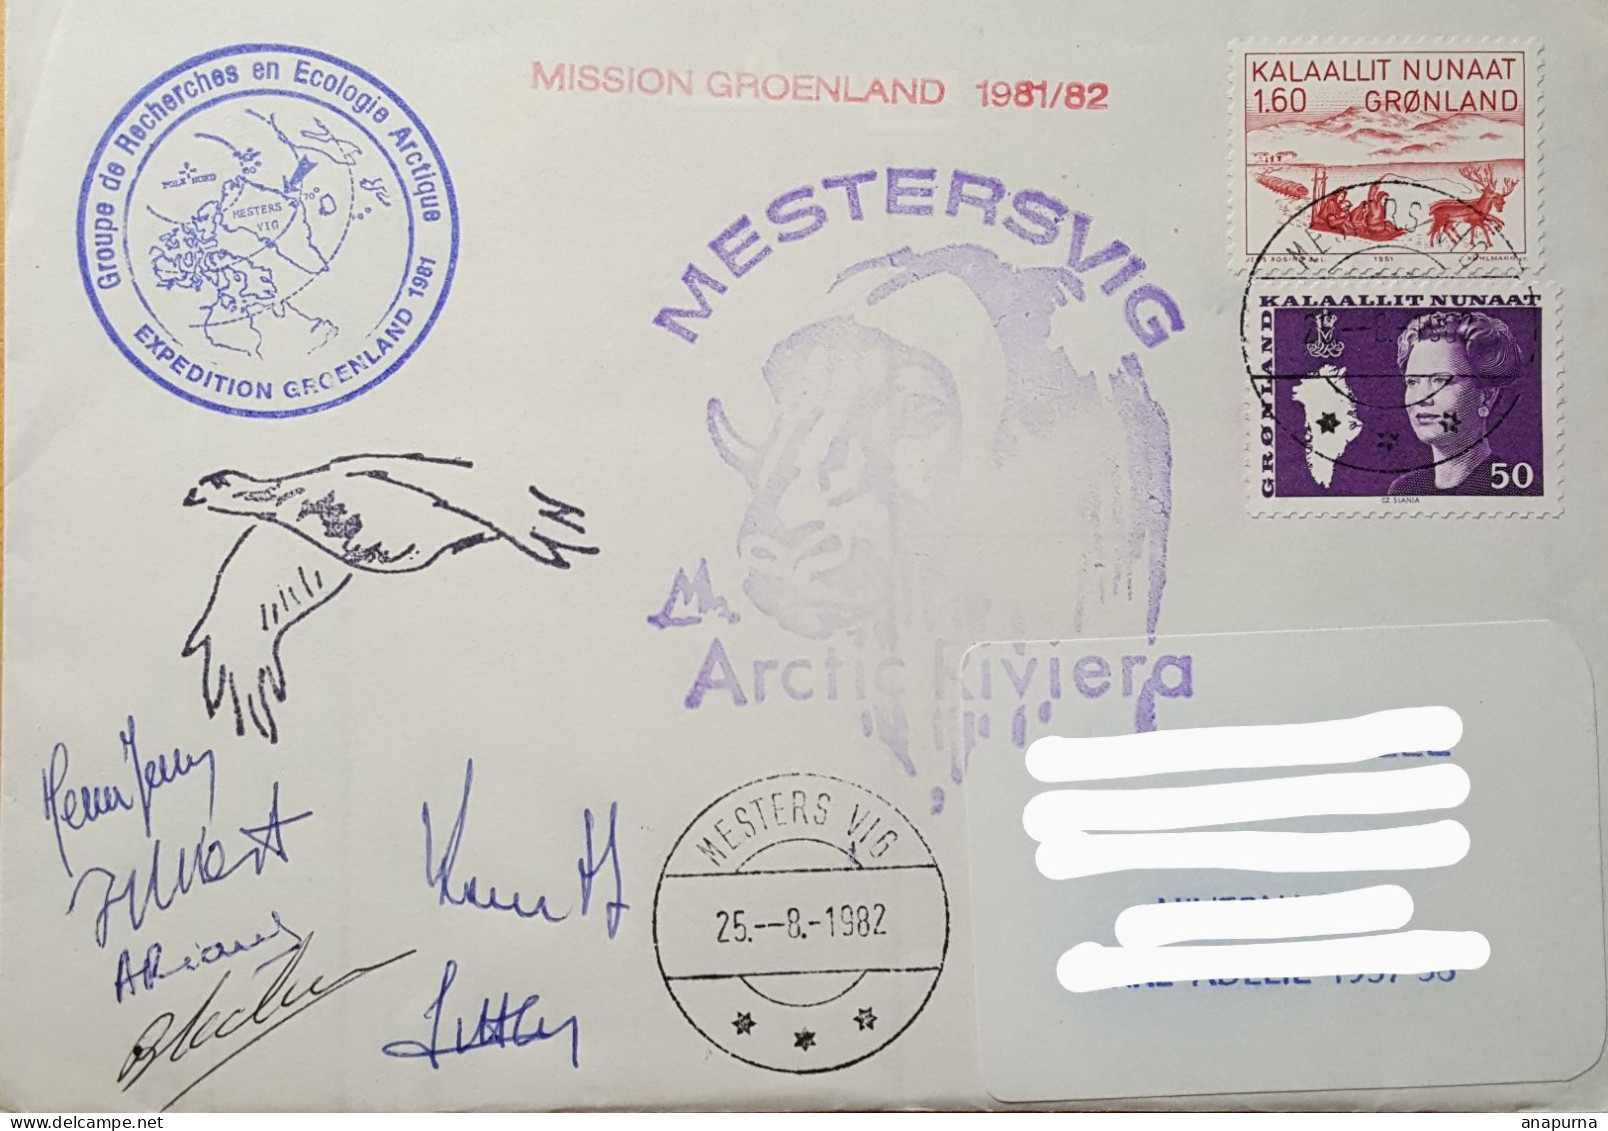 Pli Groenland. Expédition Du Groupe Recherche Ecologie Arctique 81/82. Mestersvig Arctic Riviera. 6 Signatures. - Programas De Investigación